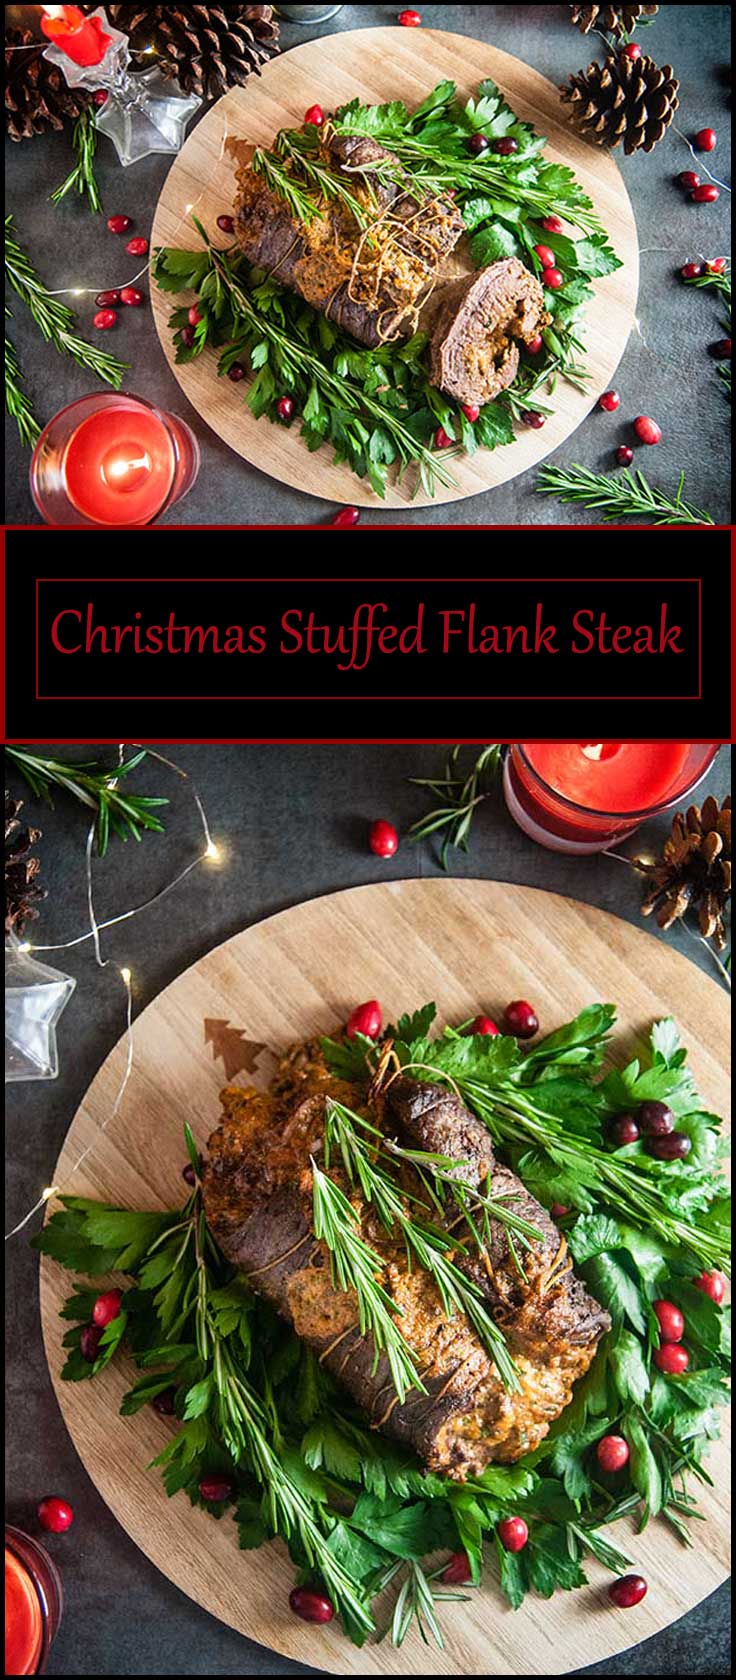 Christmas Stuffed Flank Steak from www.seasonedsprinkles.com